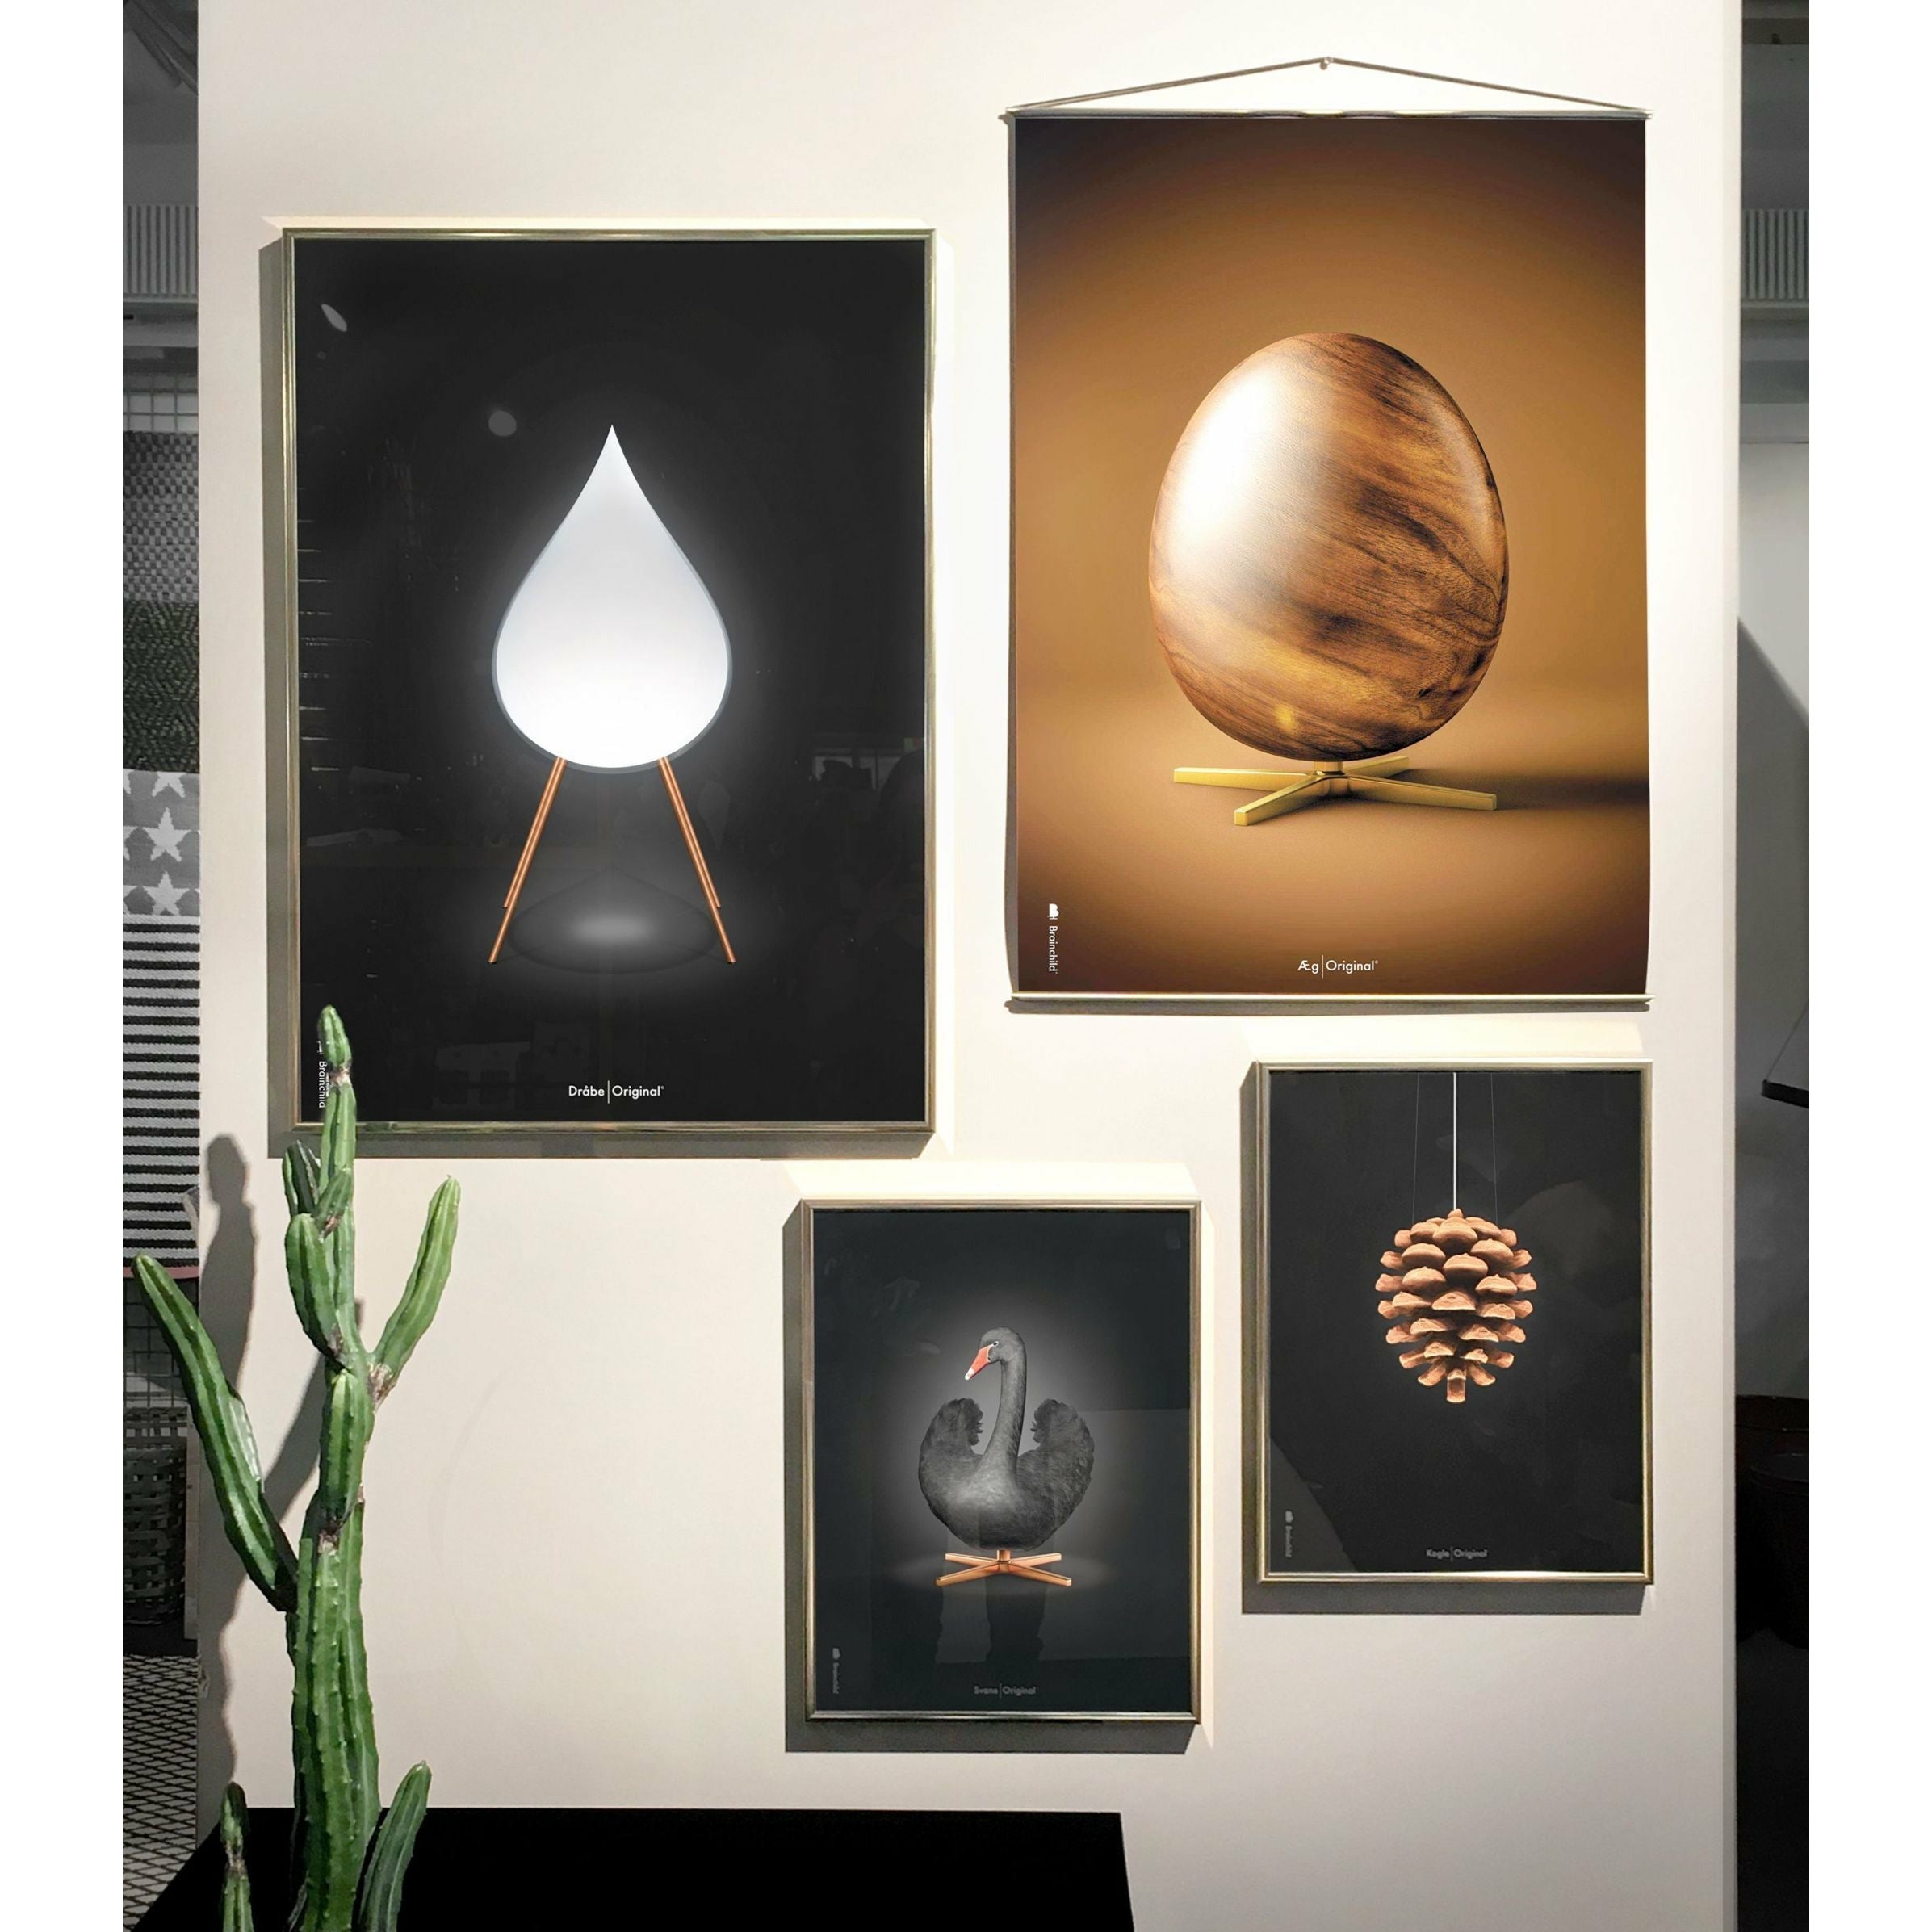 Brainchild Pine Cone Classic Poster, Frame Made Of Light Wood 30x40 Cm, Black Background